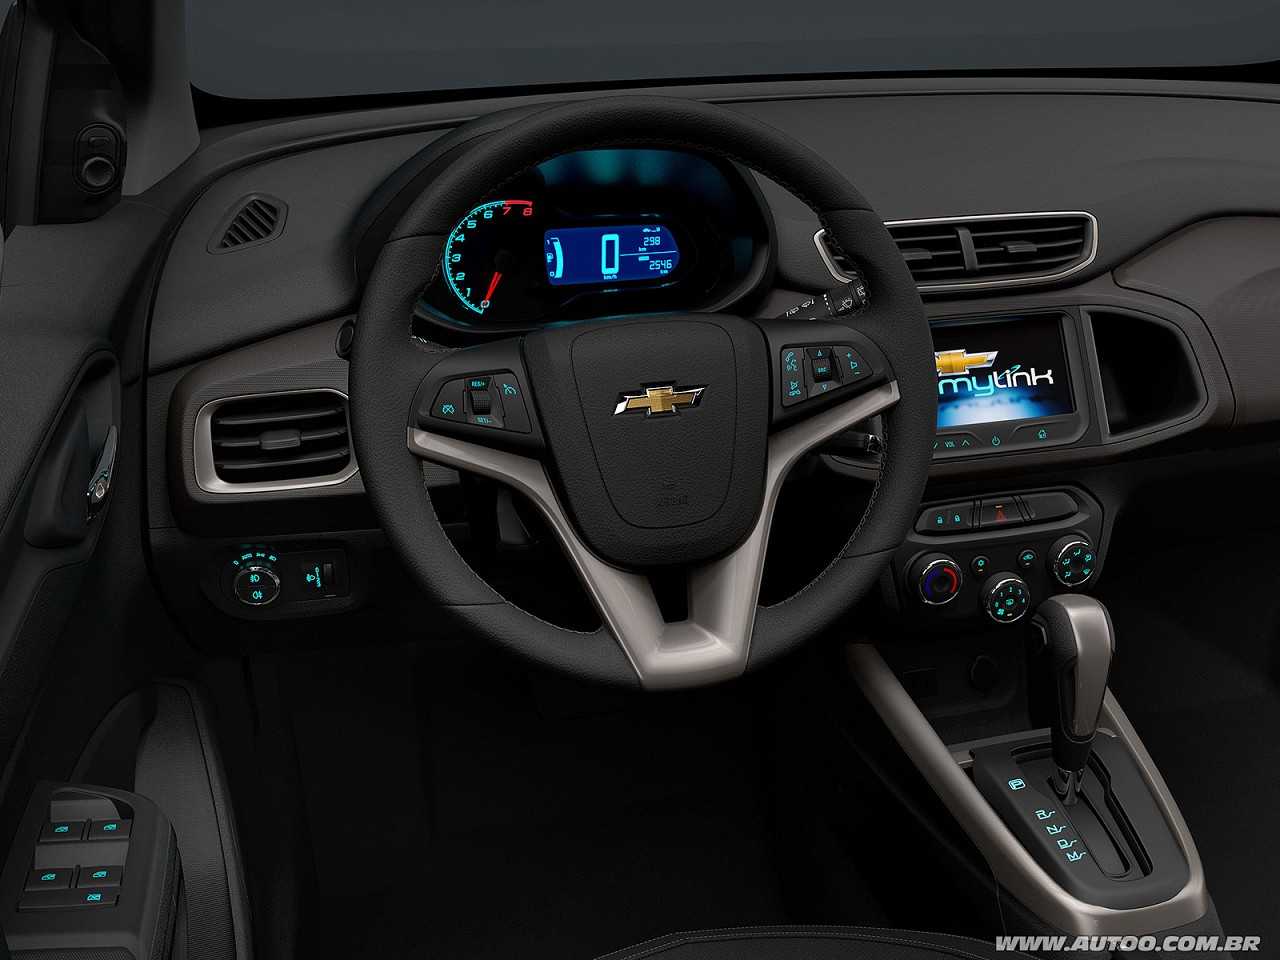 ChevroletPrisma 2016 - painel